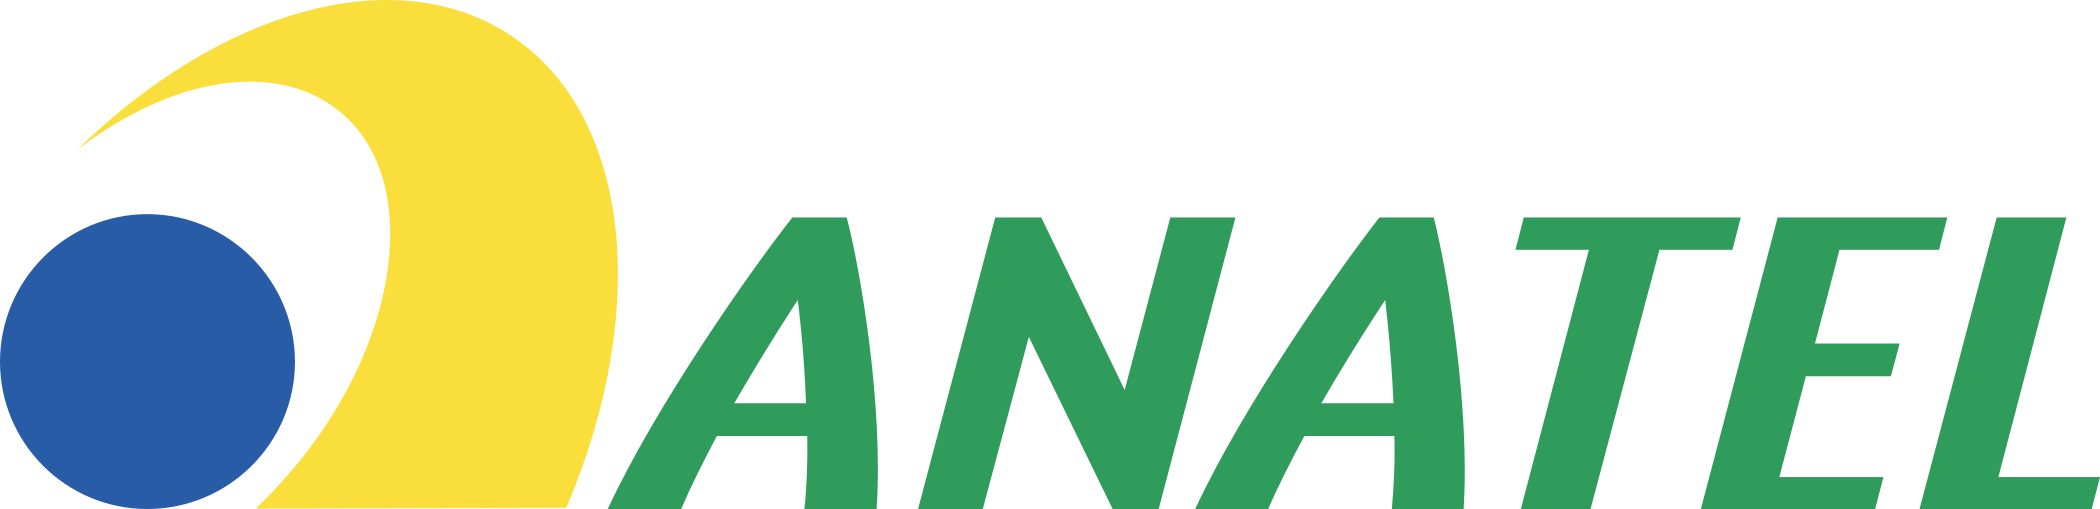 anatel-logo-2